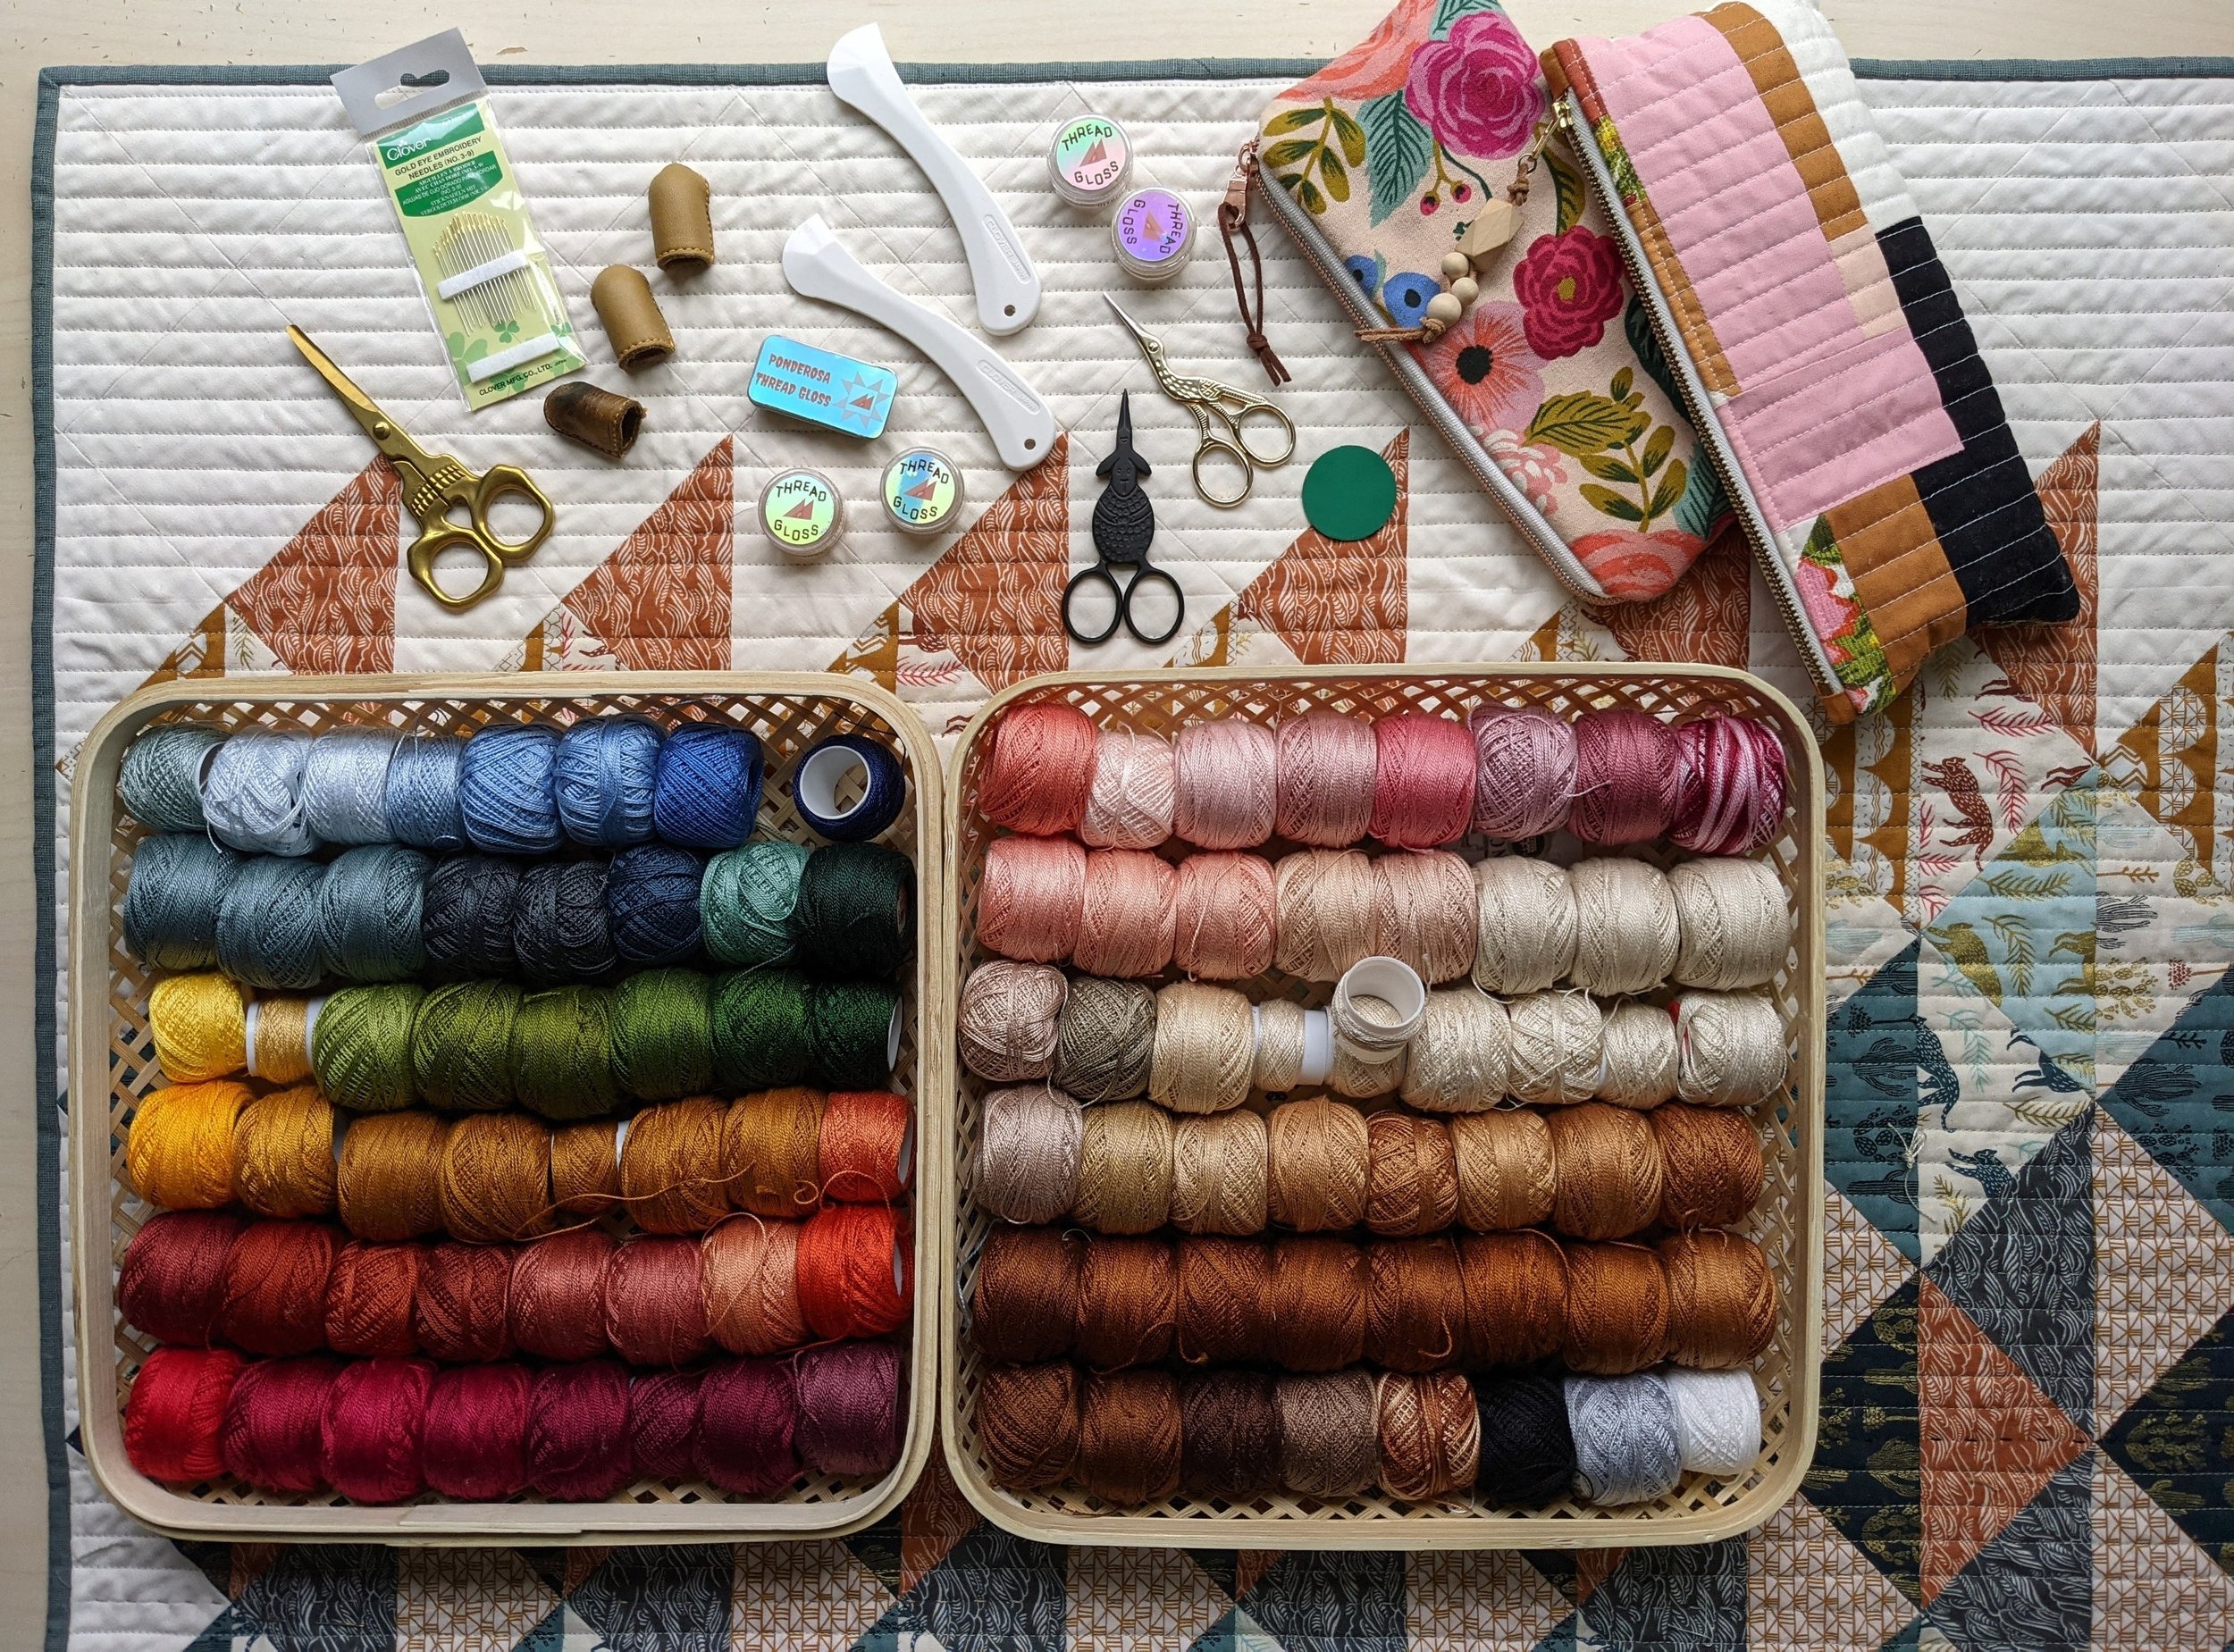 Clover Antique Needle Threader Easily Thread Yarn, Pearl Cotton & Floss 